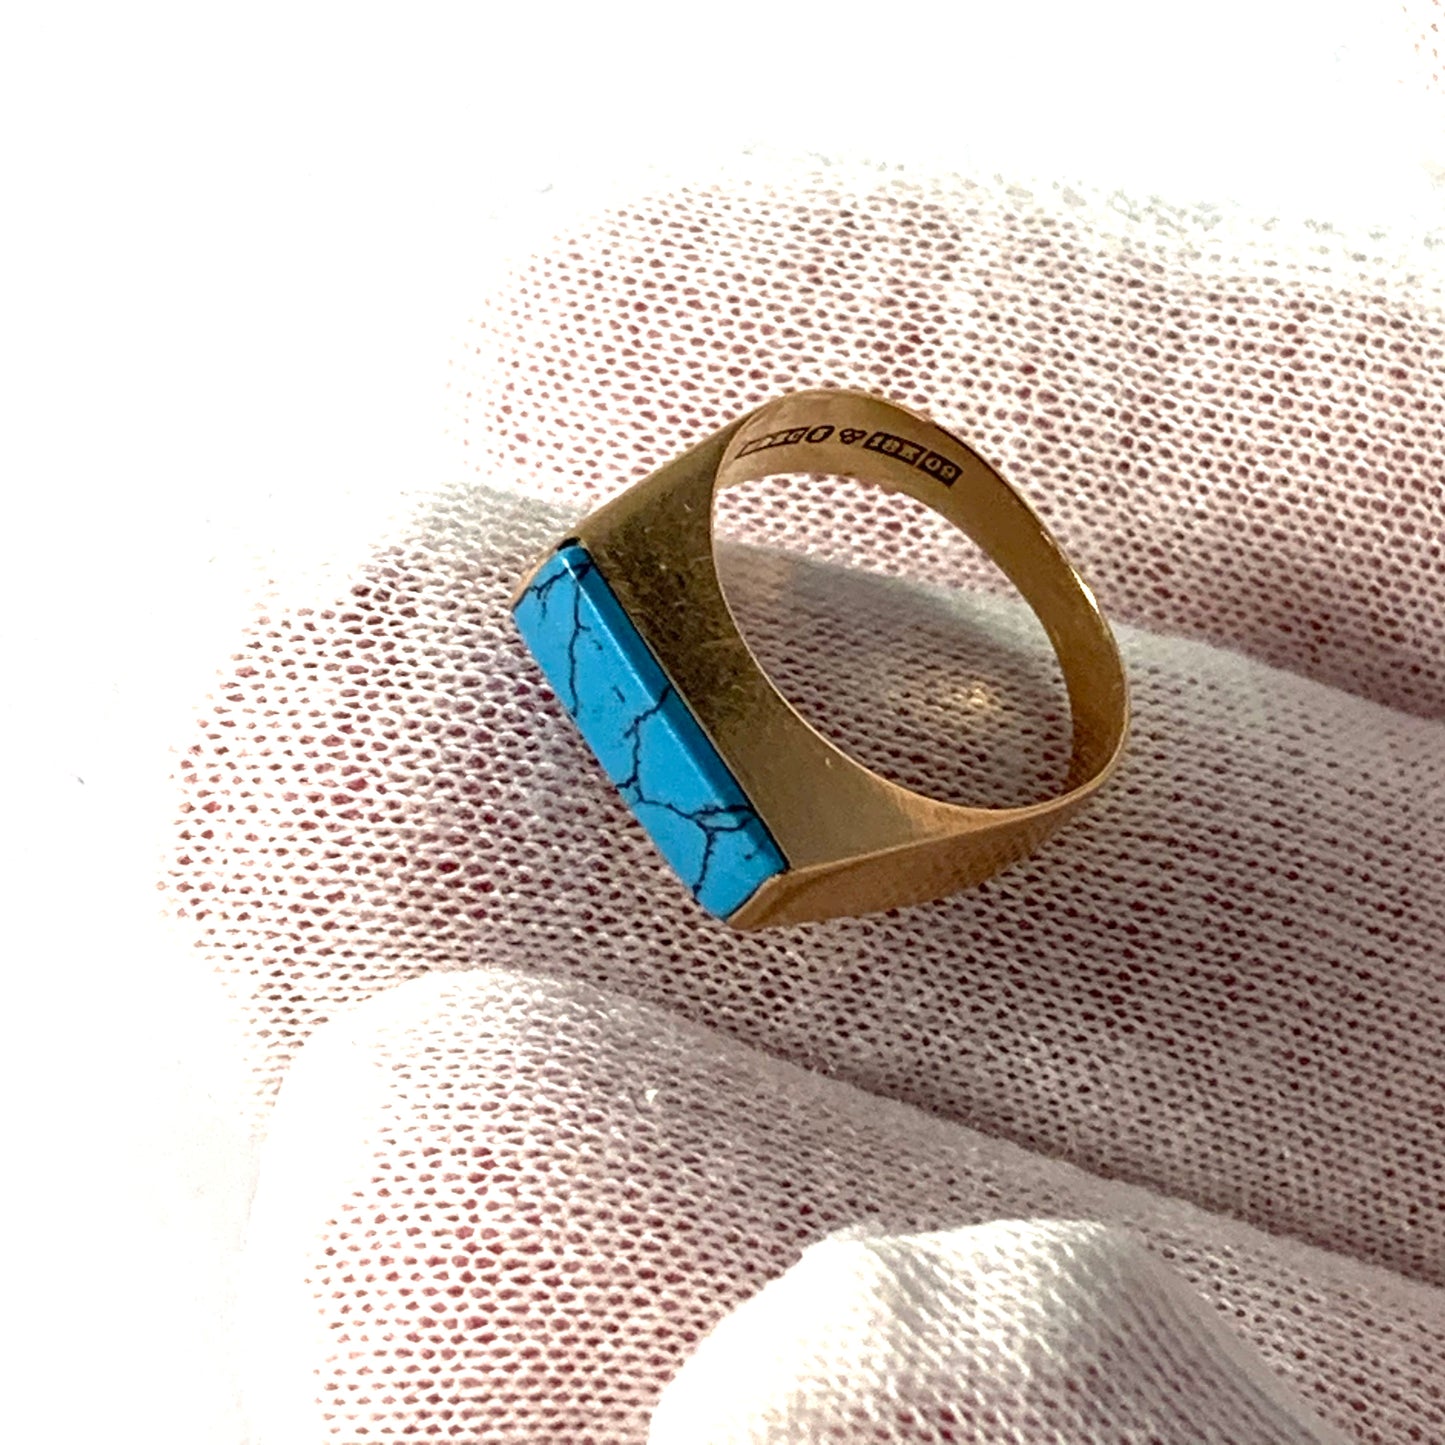 Ceson, Sweden 1964 Modernist 18k Gold Turquoise Ring.